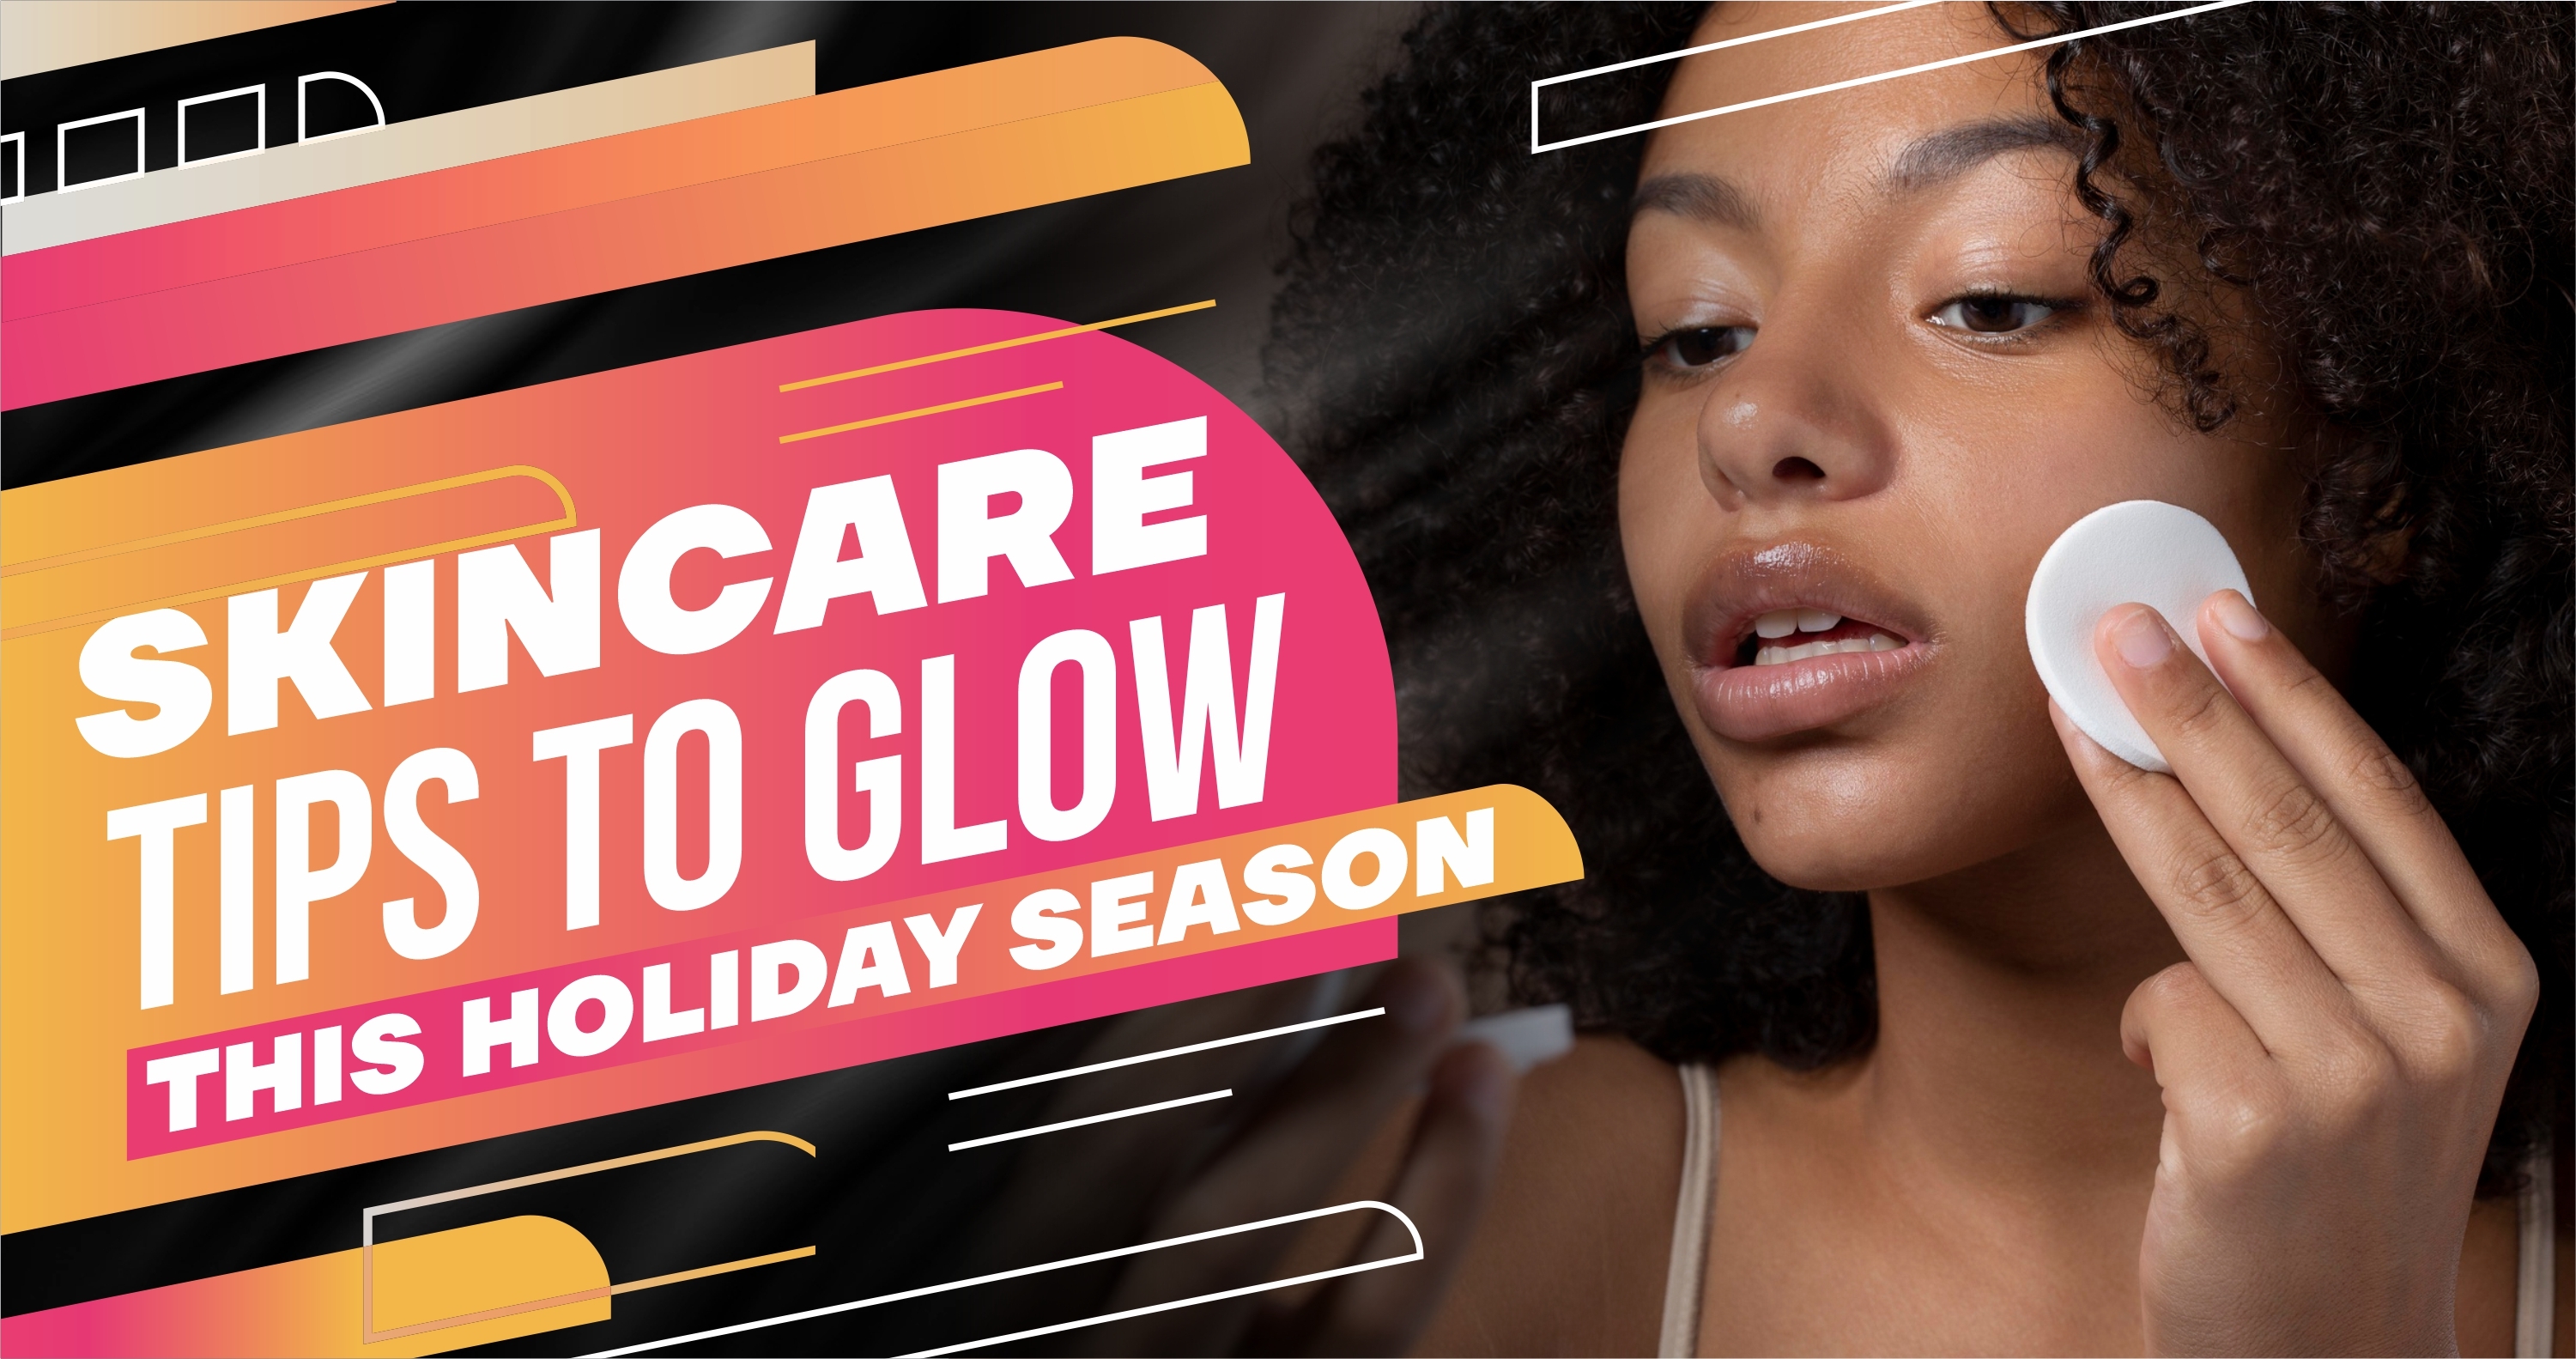 Skincare Tips to Glow This Holiday Season